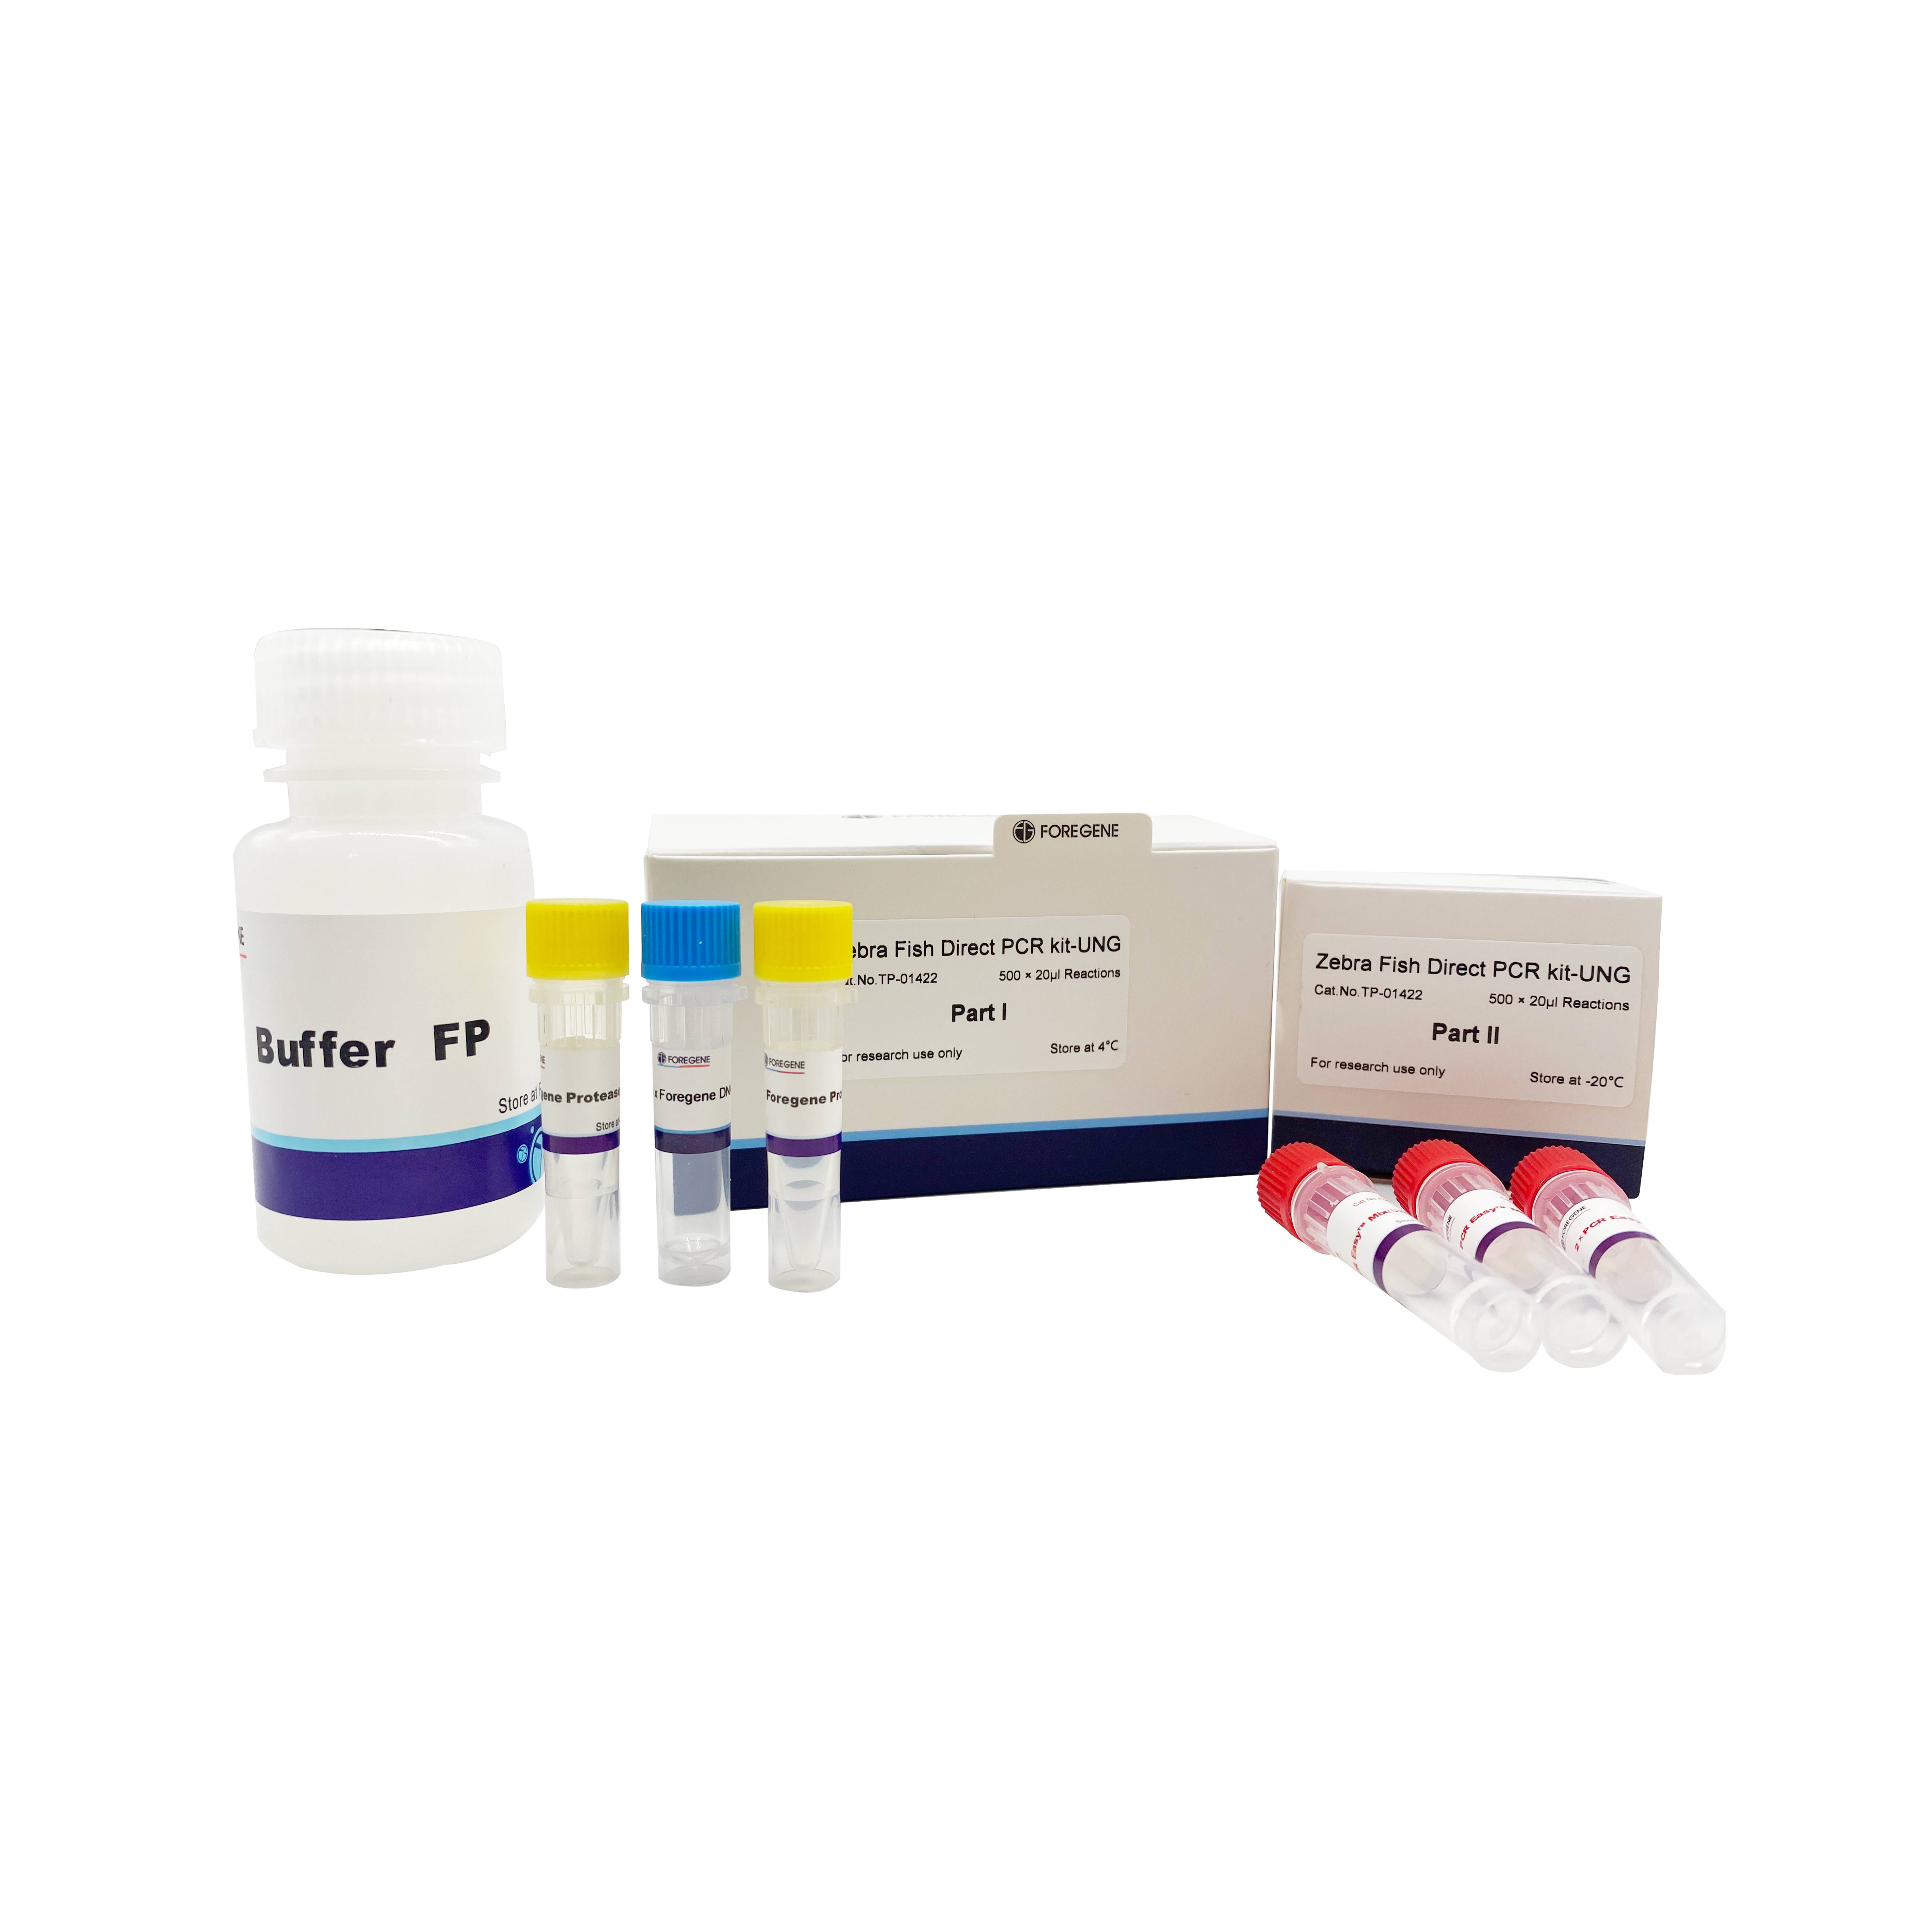 Zebra Fish Direct PCR Kit-UNG Direct PCR Lysis Reagent (peix zebra)